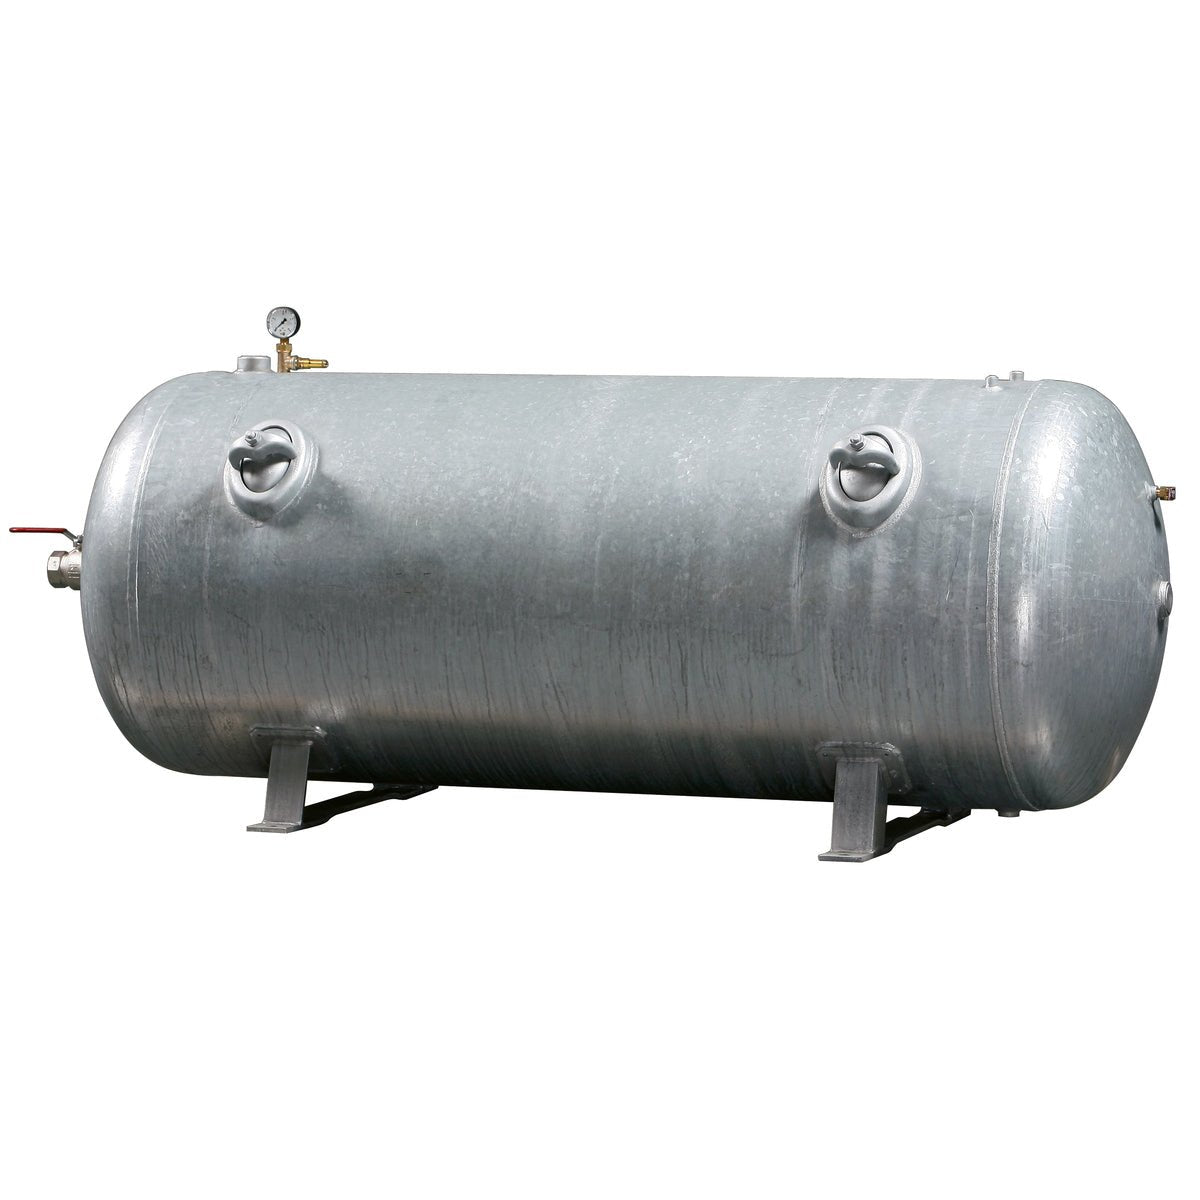 Kaeser compressed air tank 1000/11 lg. CE/PED